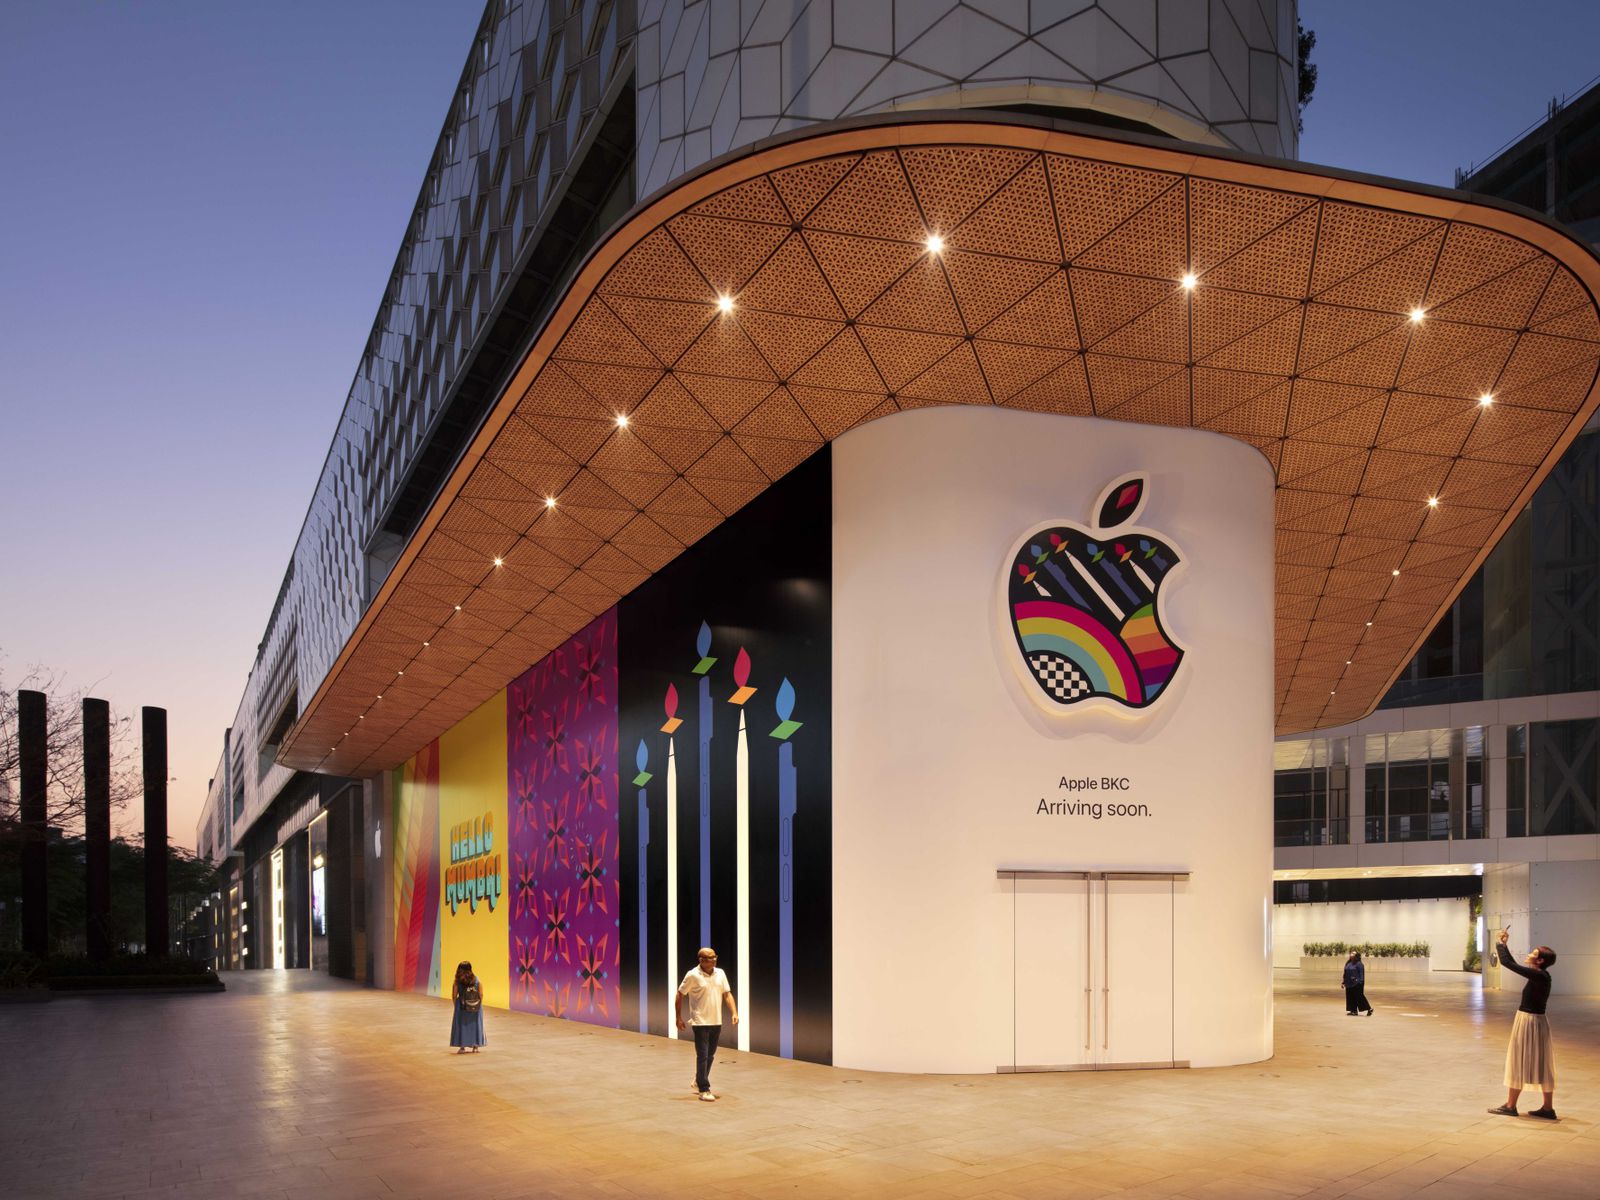 Apple BKC Retail Store in Mumbai 'Coming Soon,'.